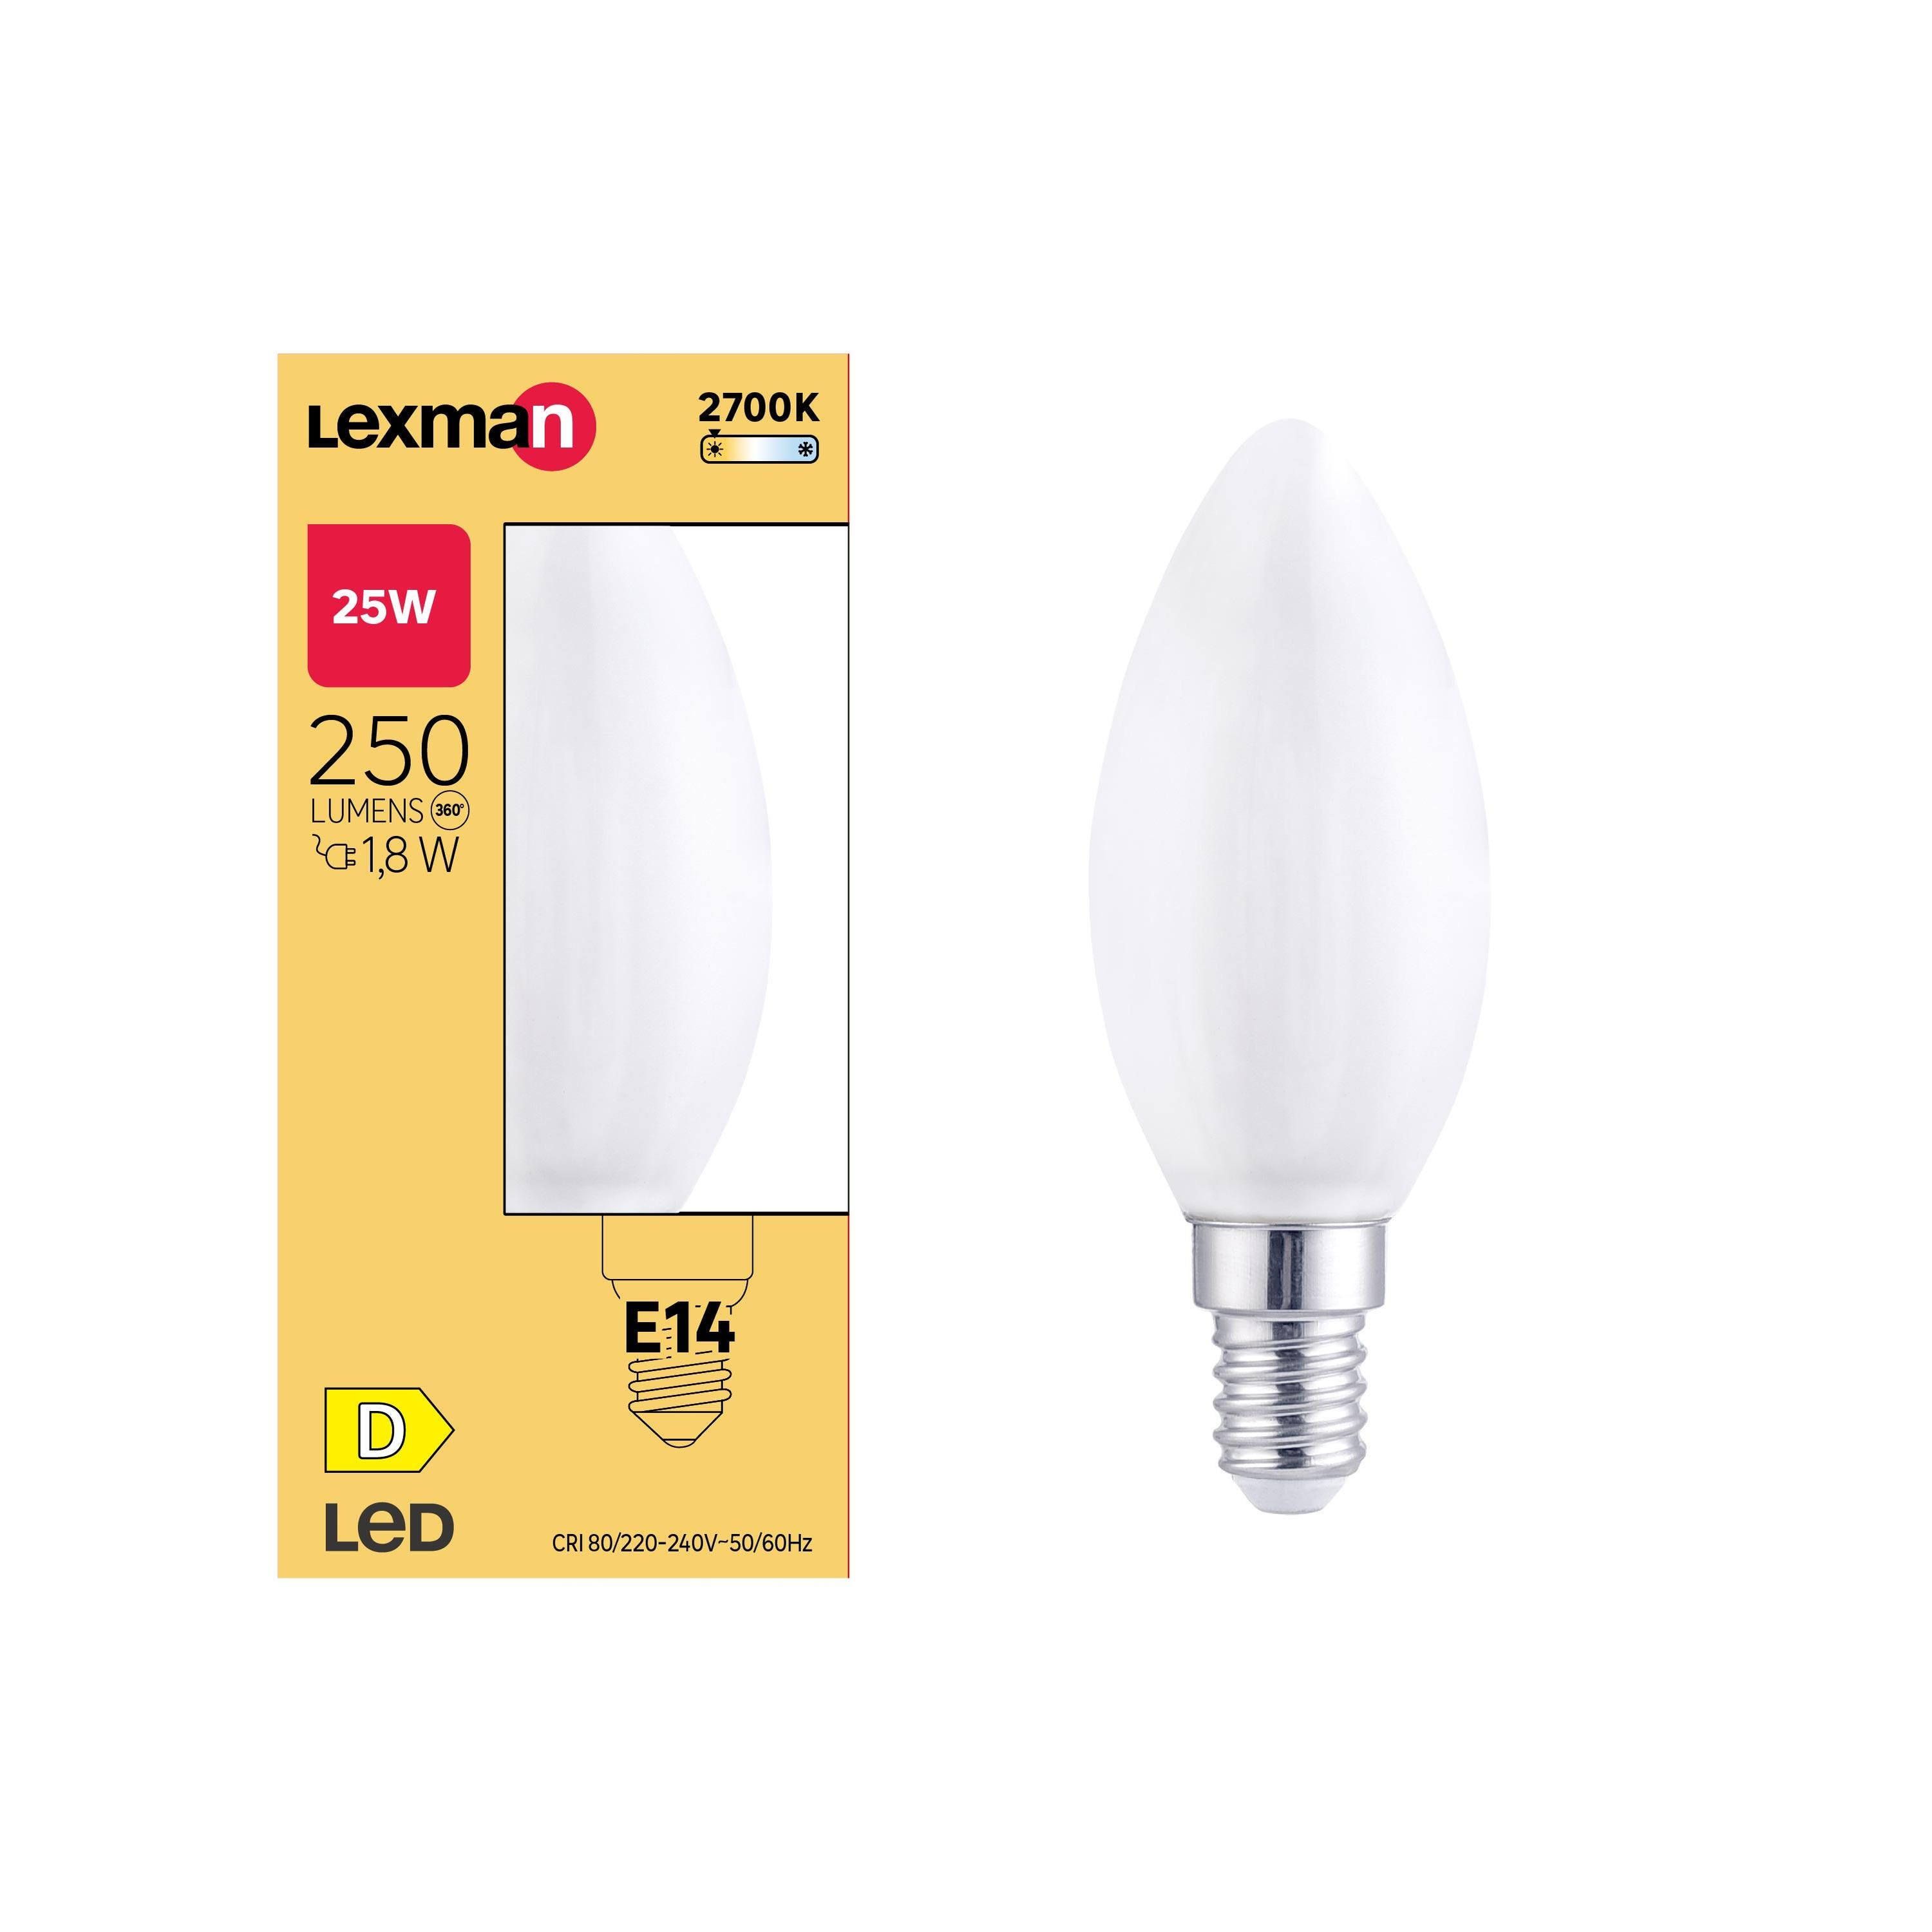 Ampoule led, flamme, E14, 250lm = 25W, blanc chaud, LEXMAN